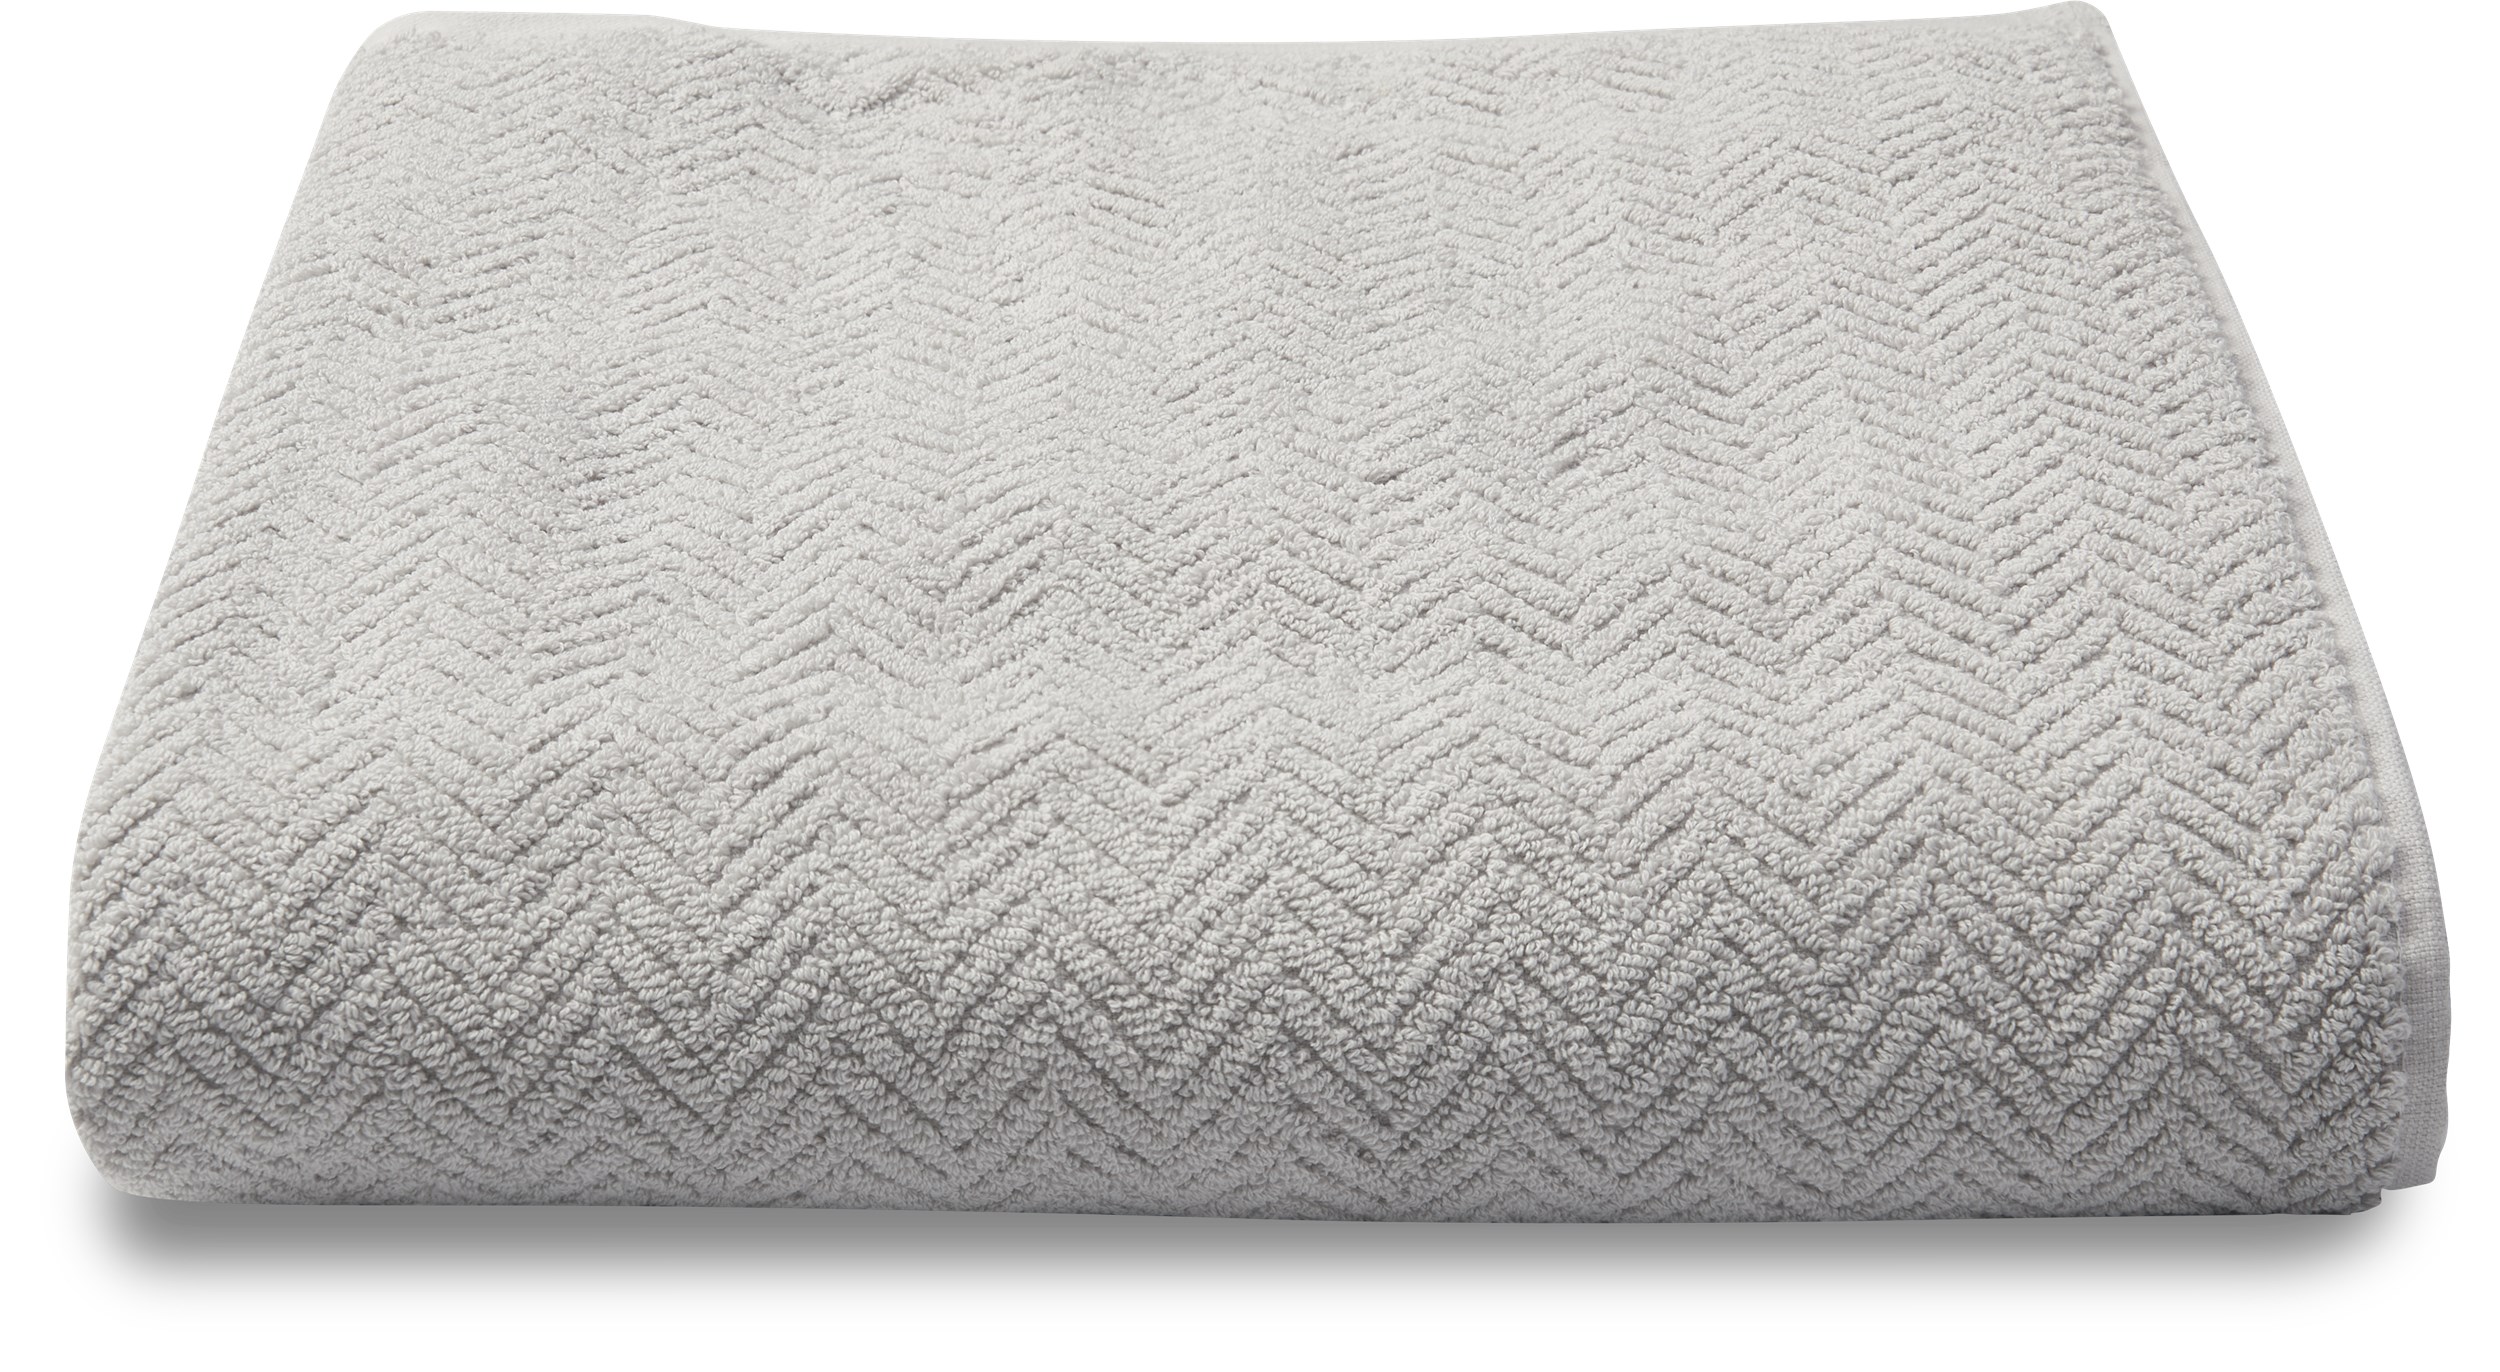 Vega Håndklæde 70 x 140 cm - Micro chip økologisk bomuld og sildebensmønster